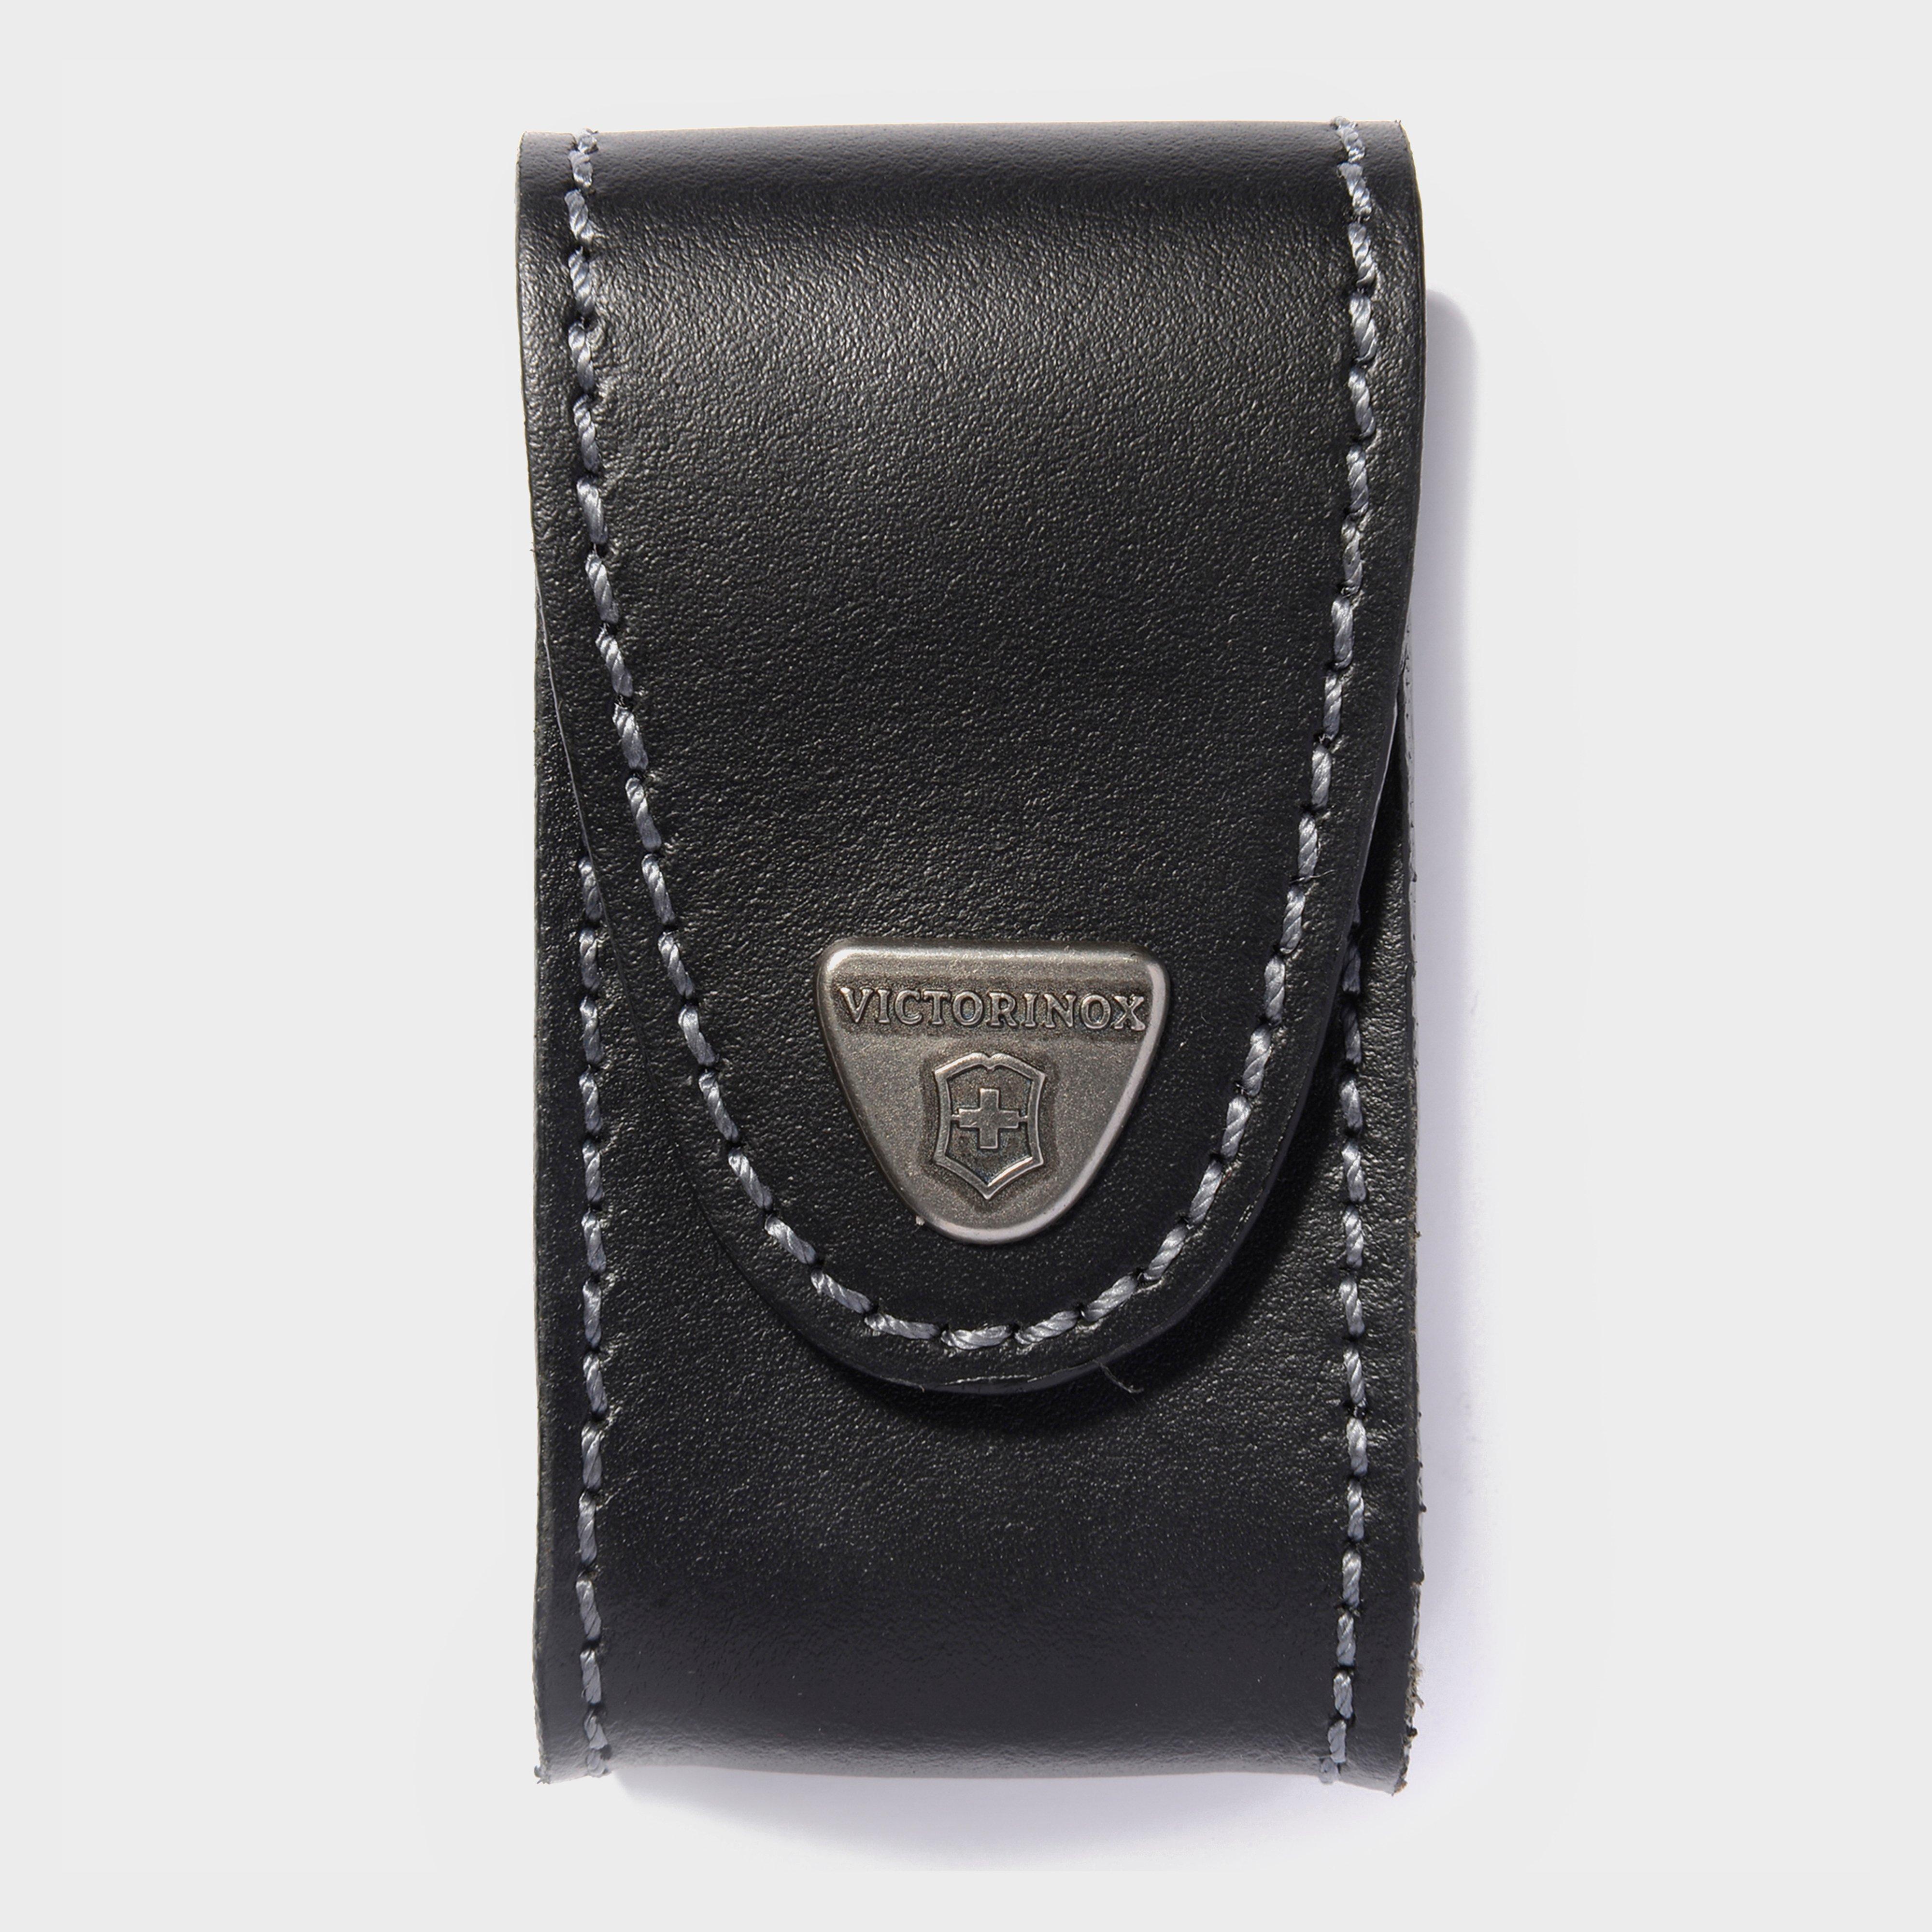 Victorinox Pocket Knife Leather Belt Pouch 5-8 Layers - Black, Black